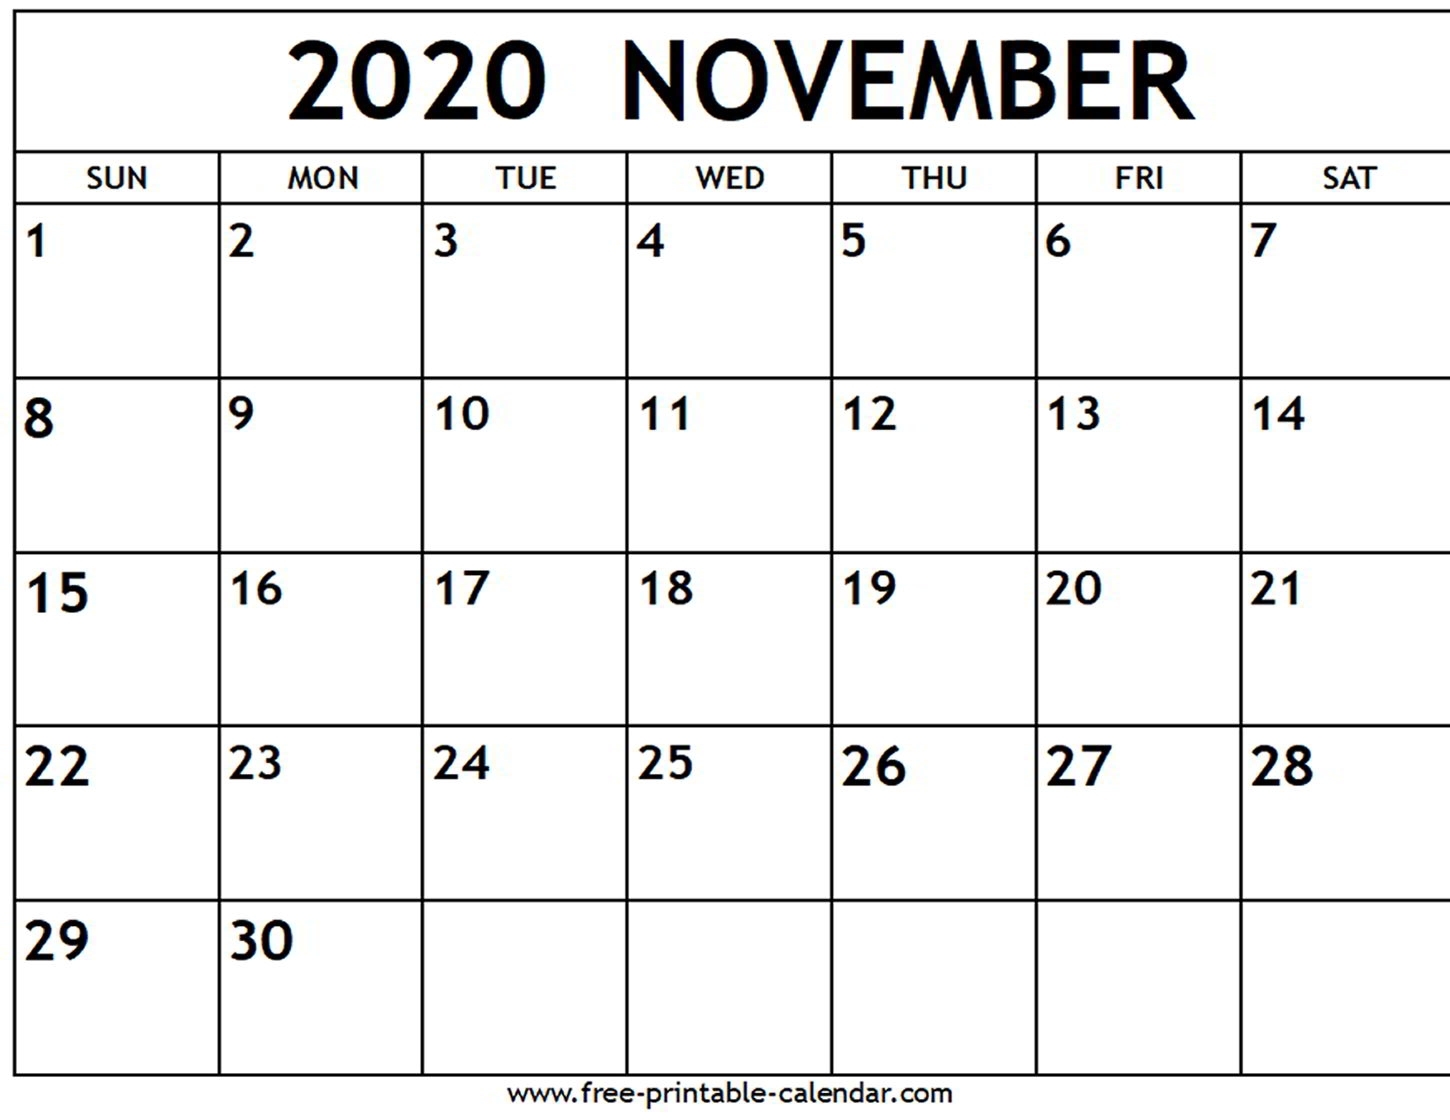 November 2020 Calendar - Free-Printable-Calendar